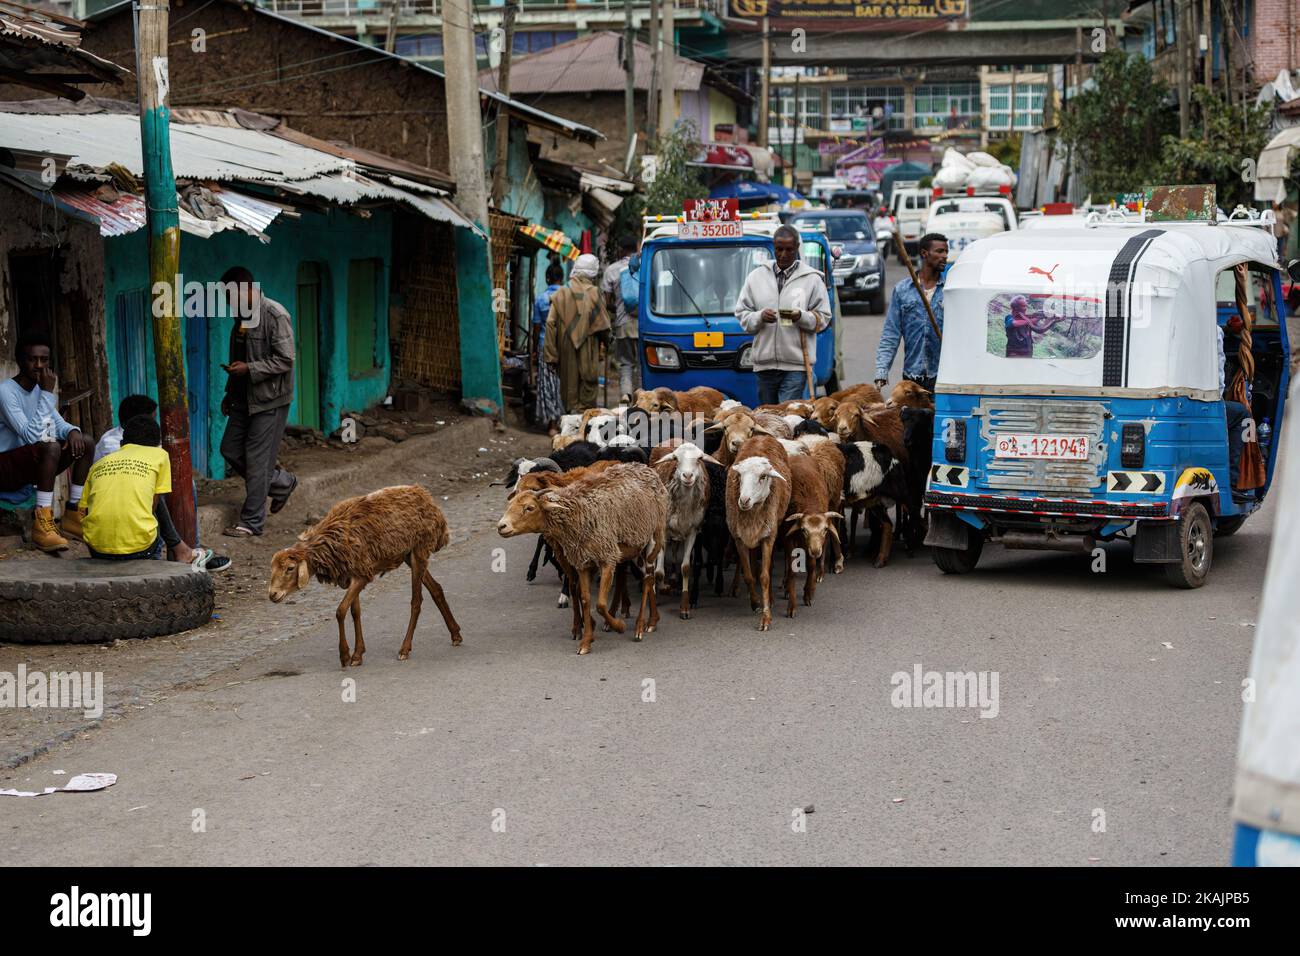 GONDAR, ETIOPIA - GENNAIO 2019: Alcune pecore nella strada che passa tra Bajajs a Gondar, Etiopia. Foto Stock